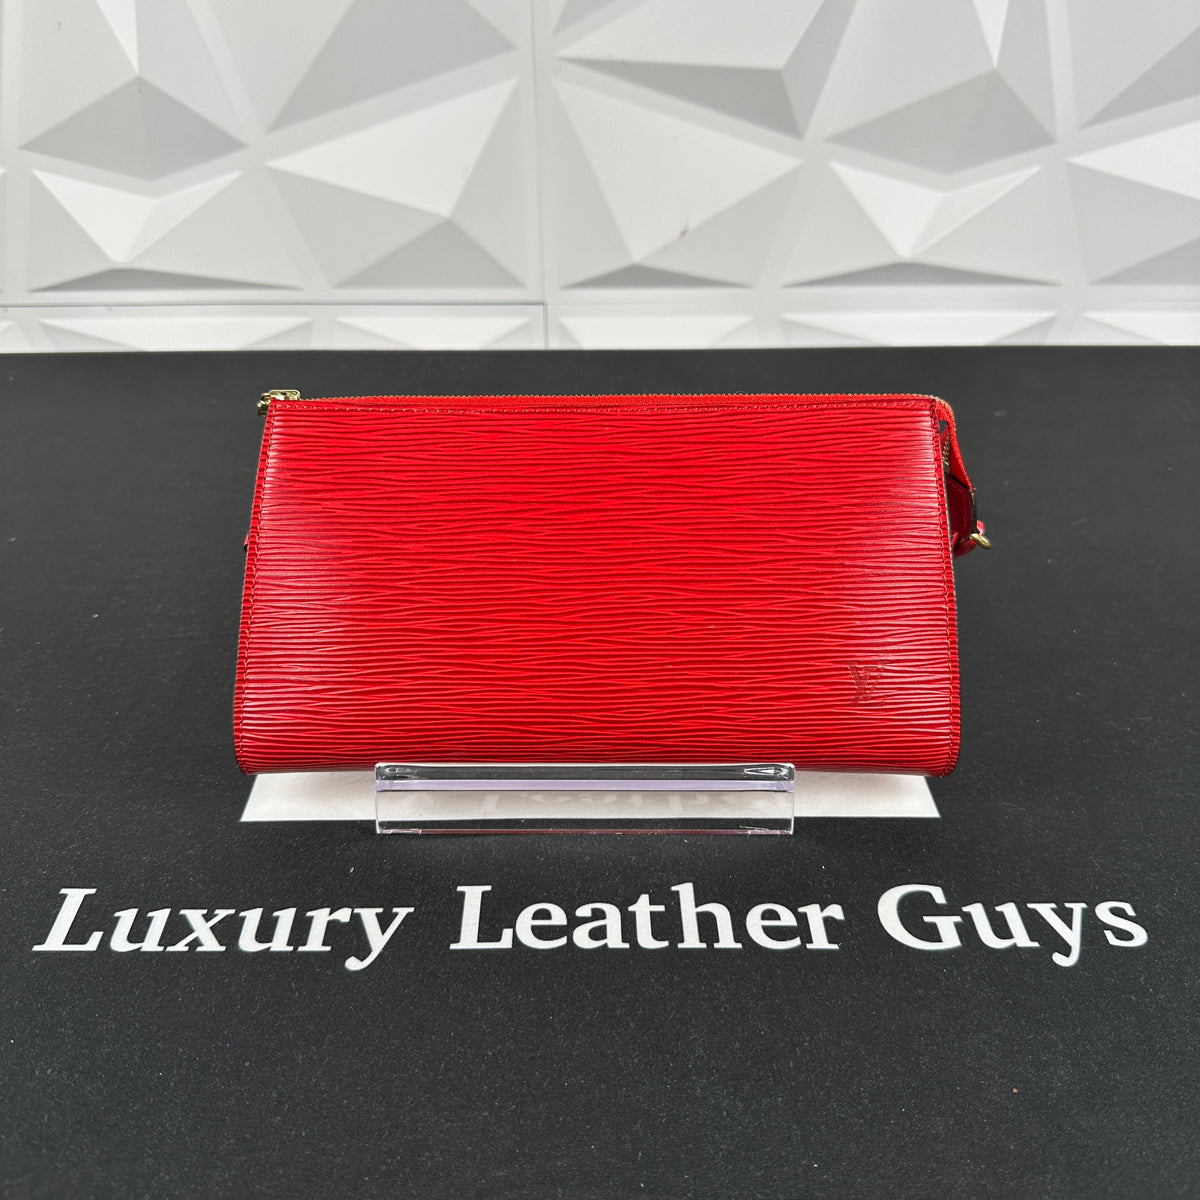 Louis Vuitton Zippy Wallet Rouge Epi Red Leather